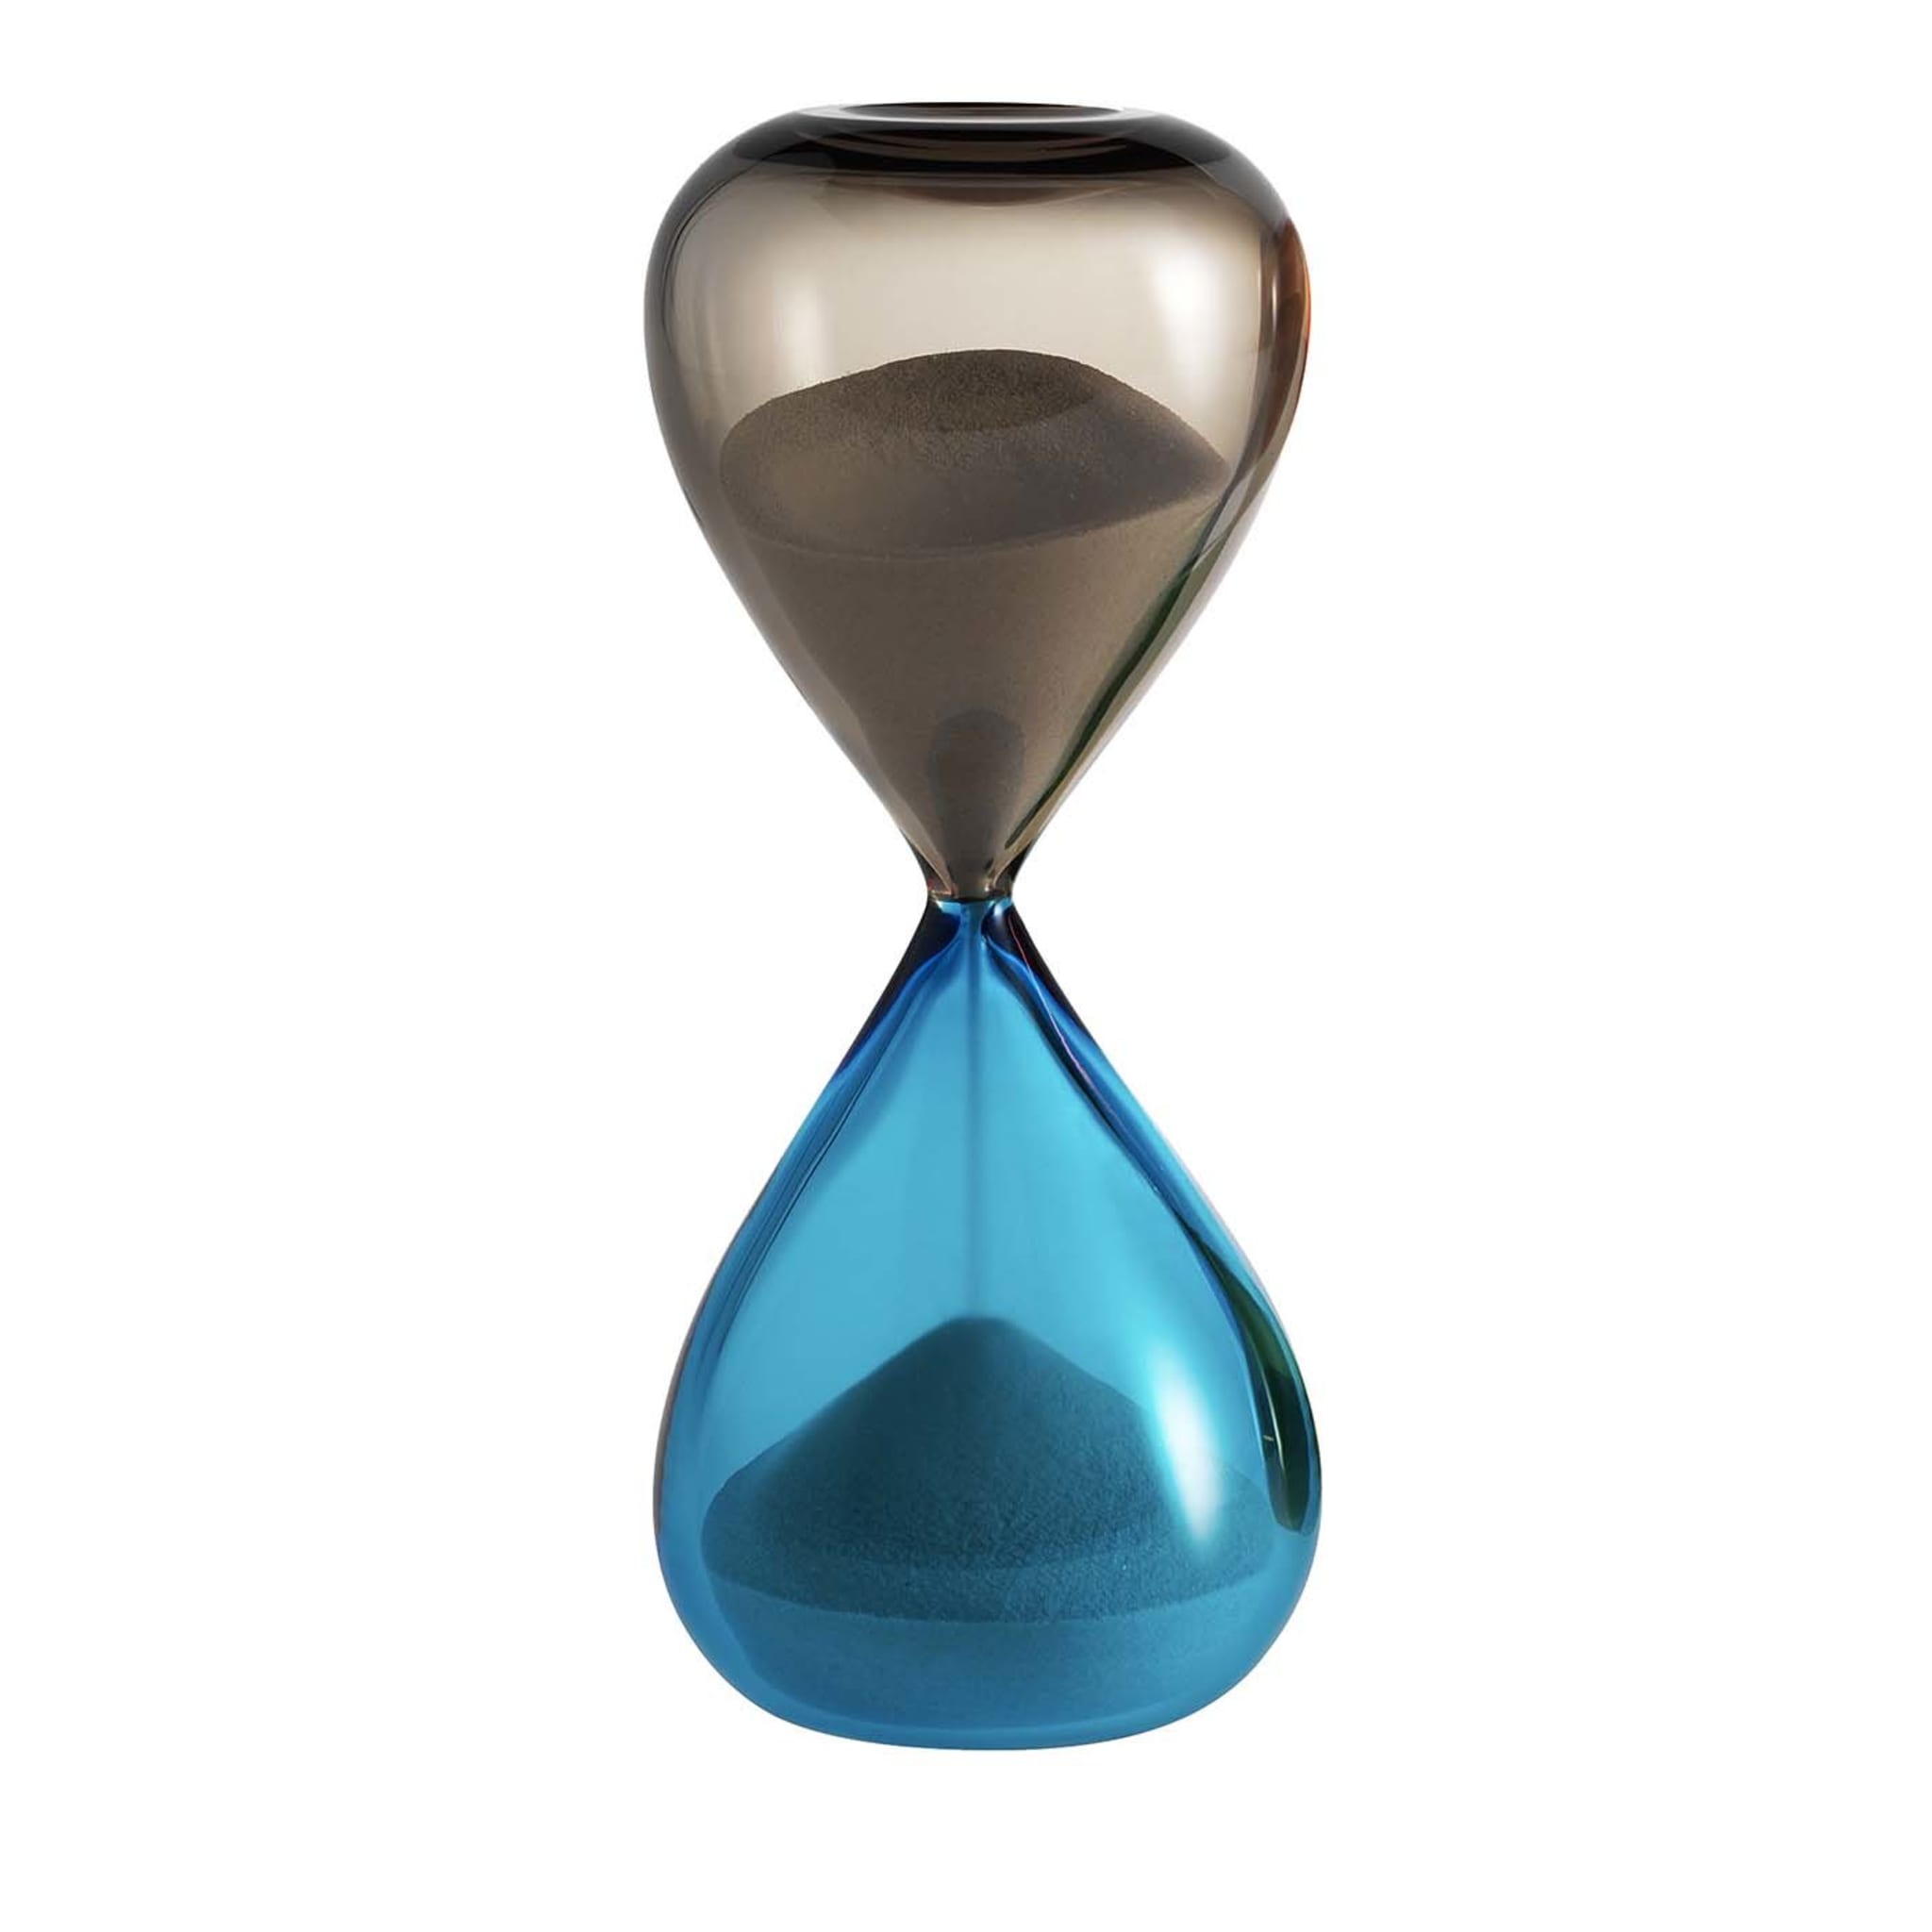 Clessidre Smoky/Aqua Hourglass by Fulvio Bianconi - Main view